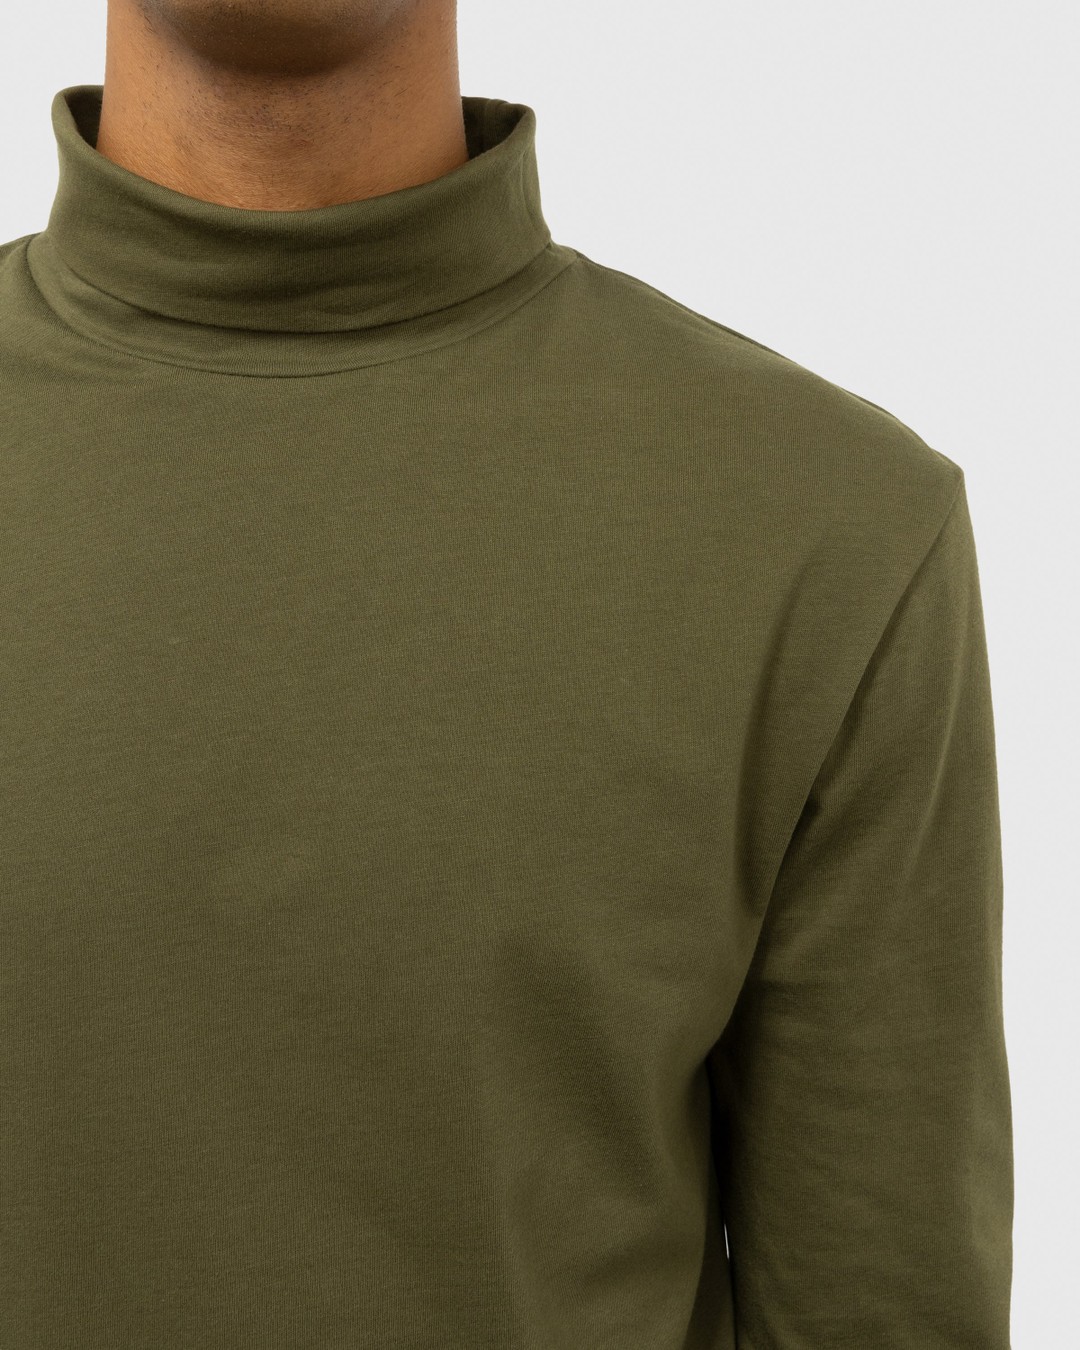 Dries van Noten – Heyzo Turtleneck Jersey Shirt Green - Turtlenecks - Green - Image 5